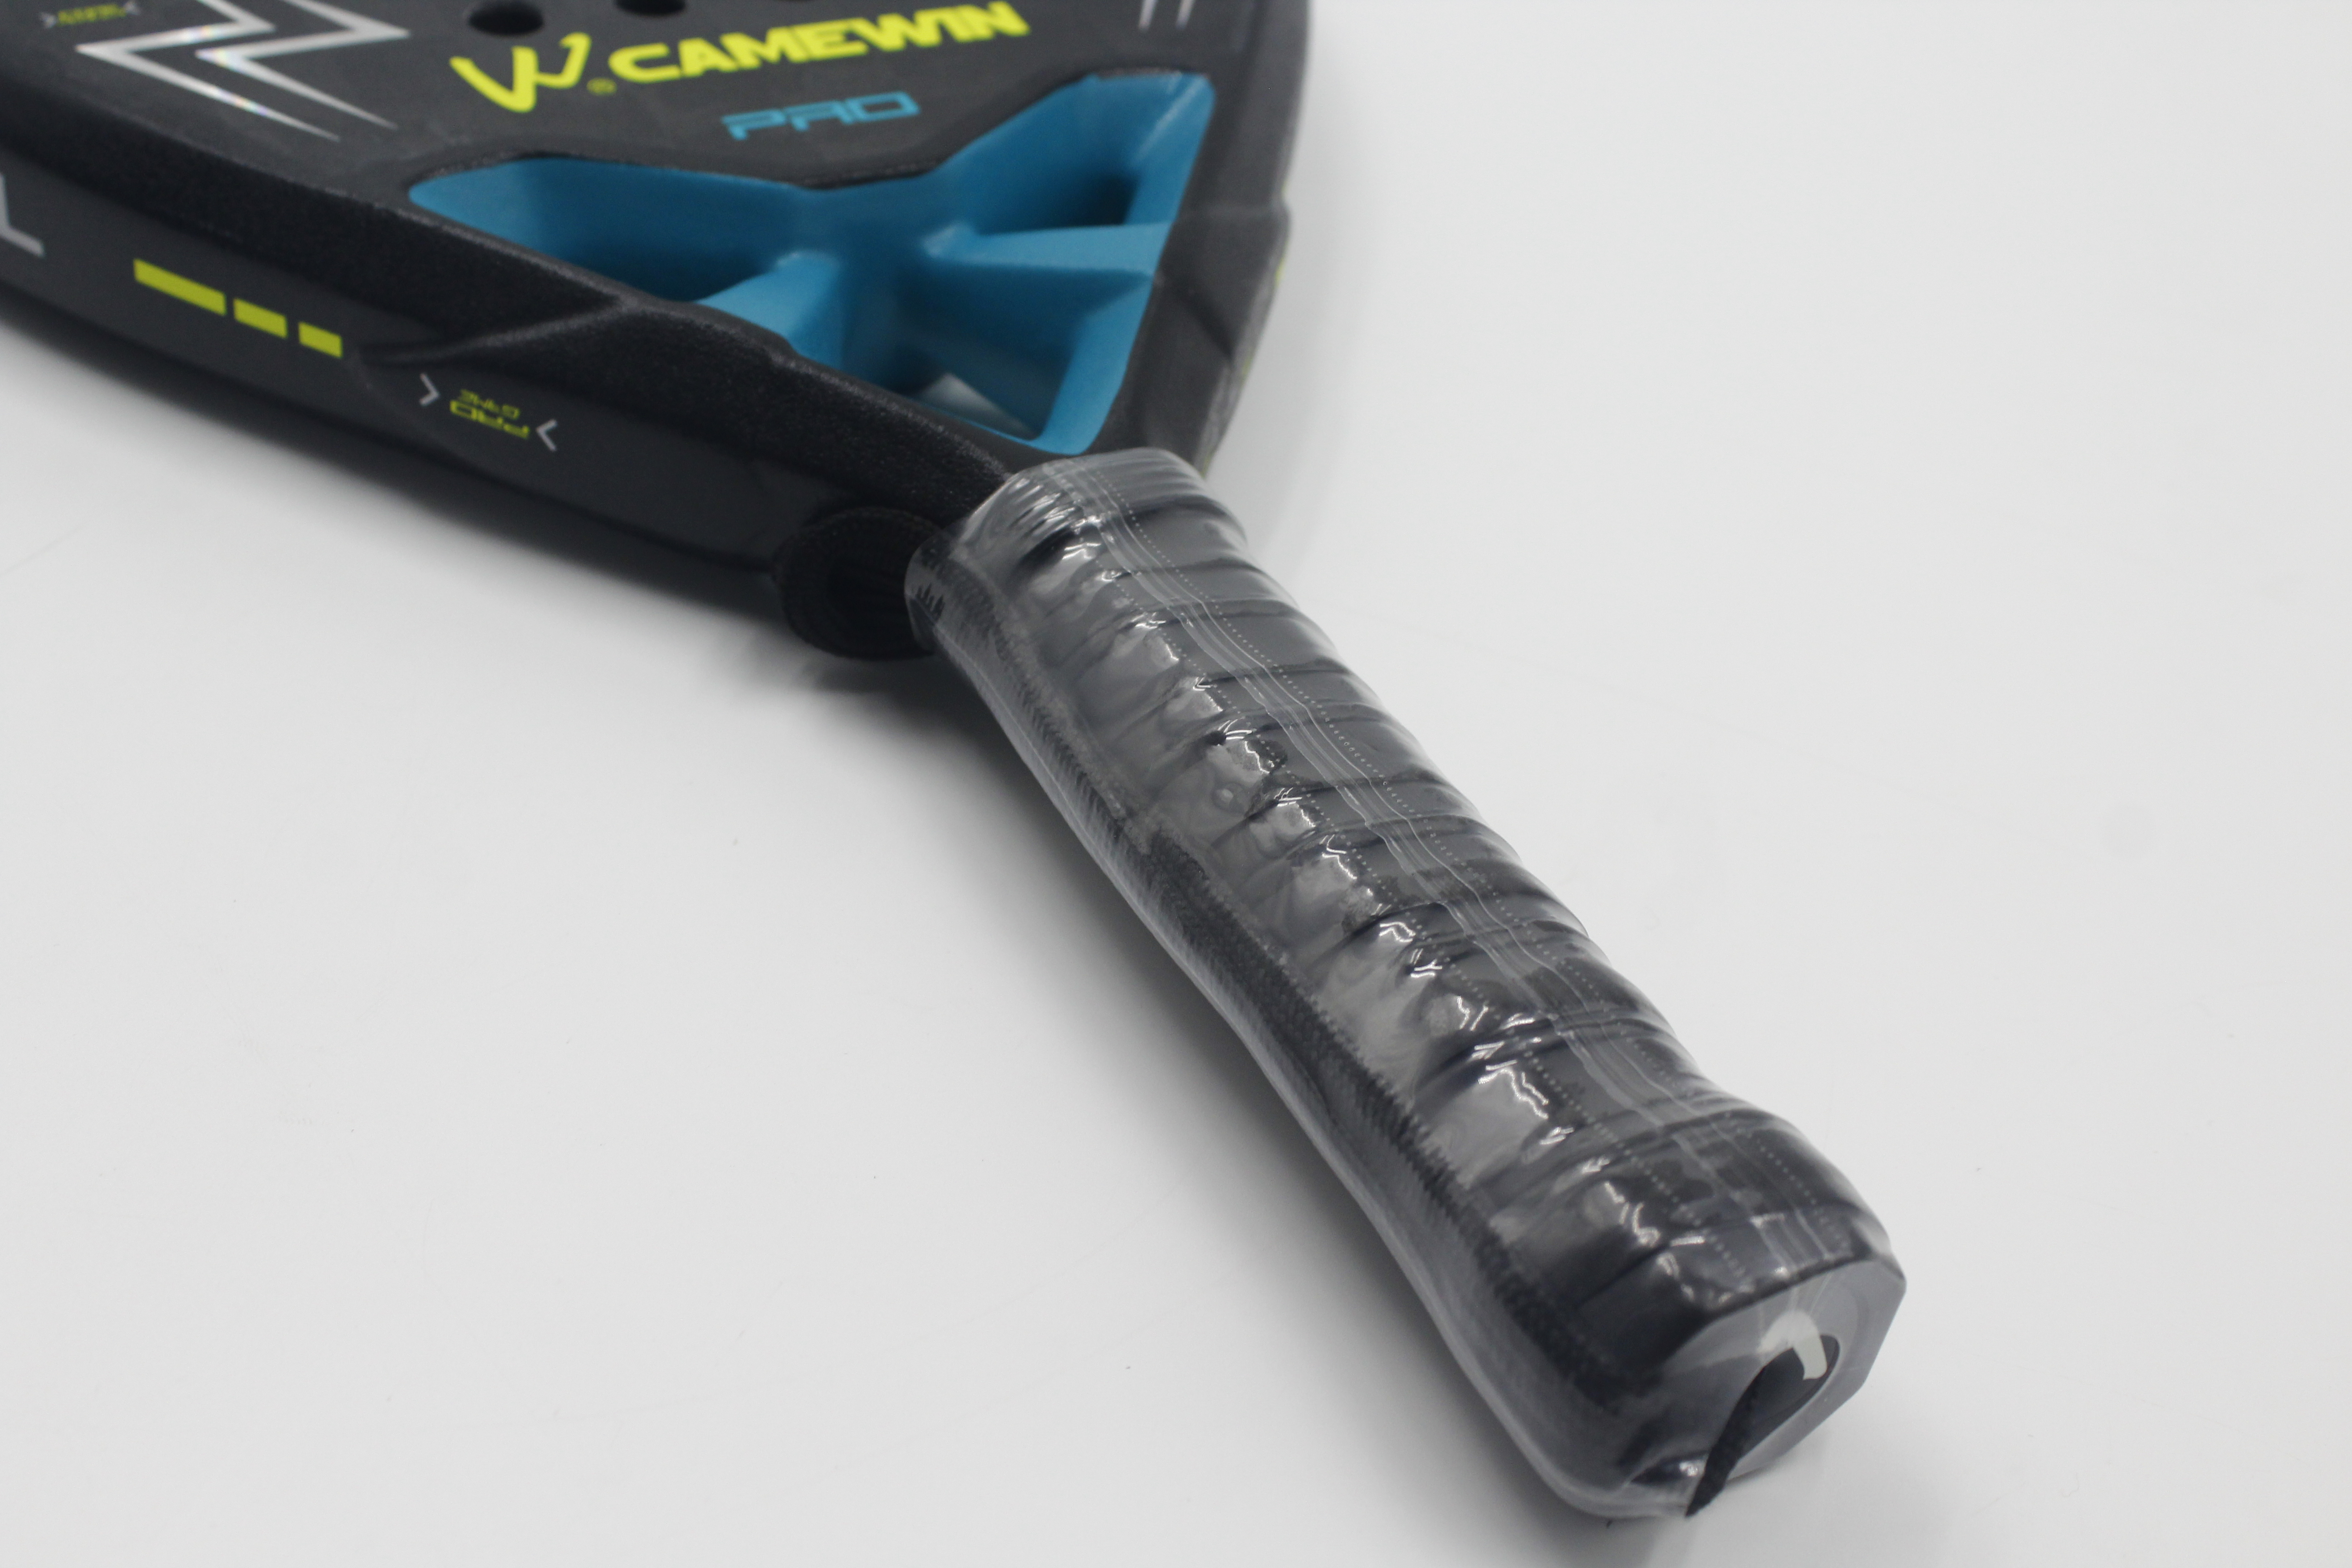 Padel Racket Carbon Fiber Surface with EVA Memory Flex Foam Core Padel Tennis Racquets Paddle Tennis Racket